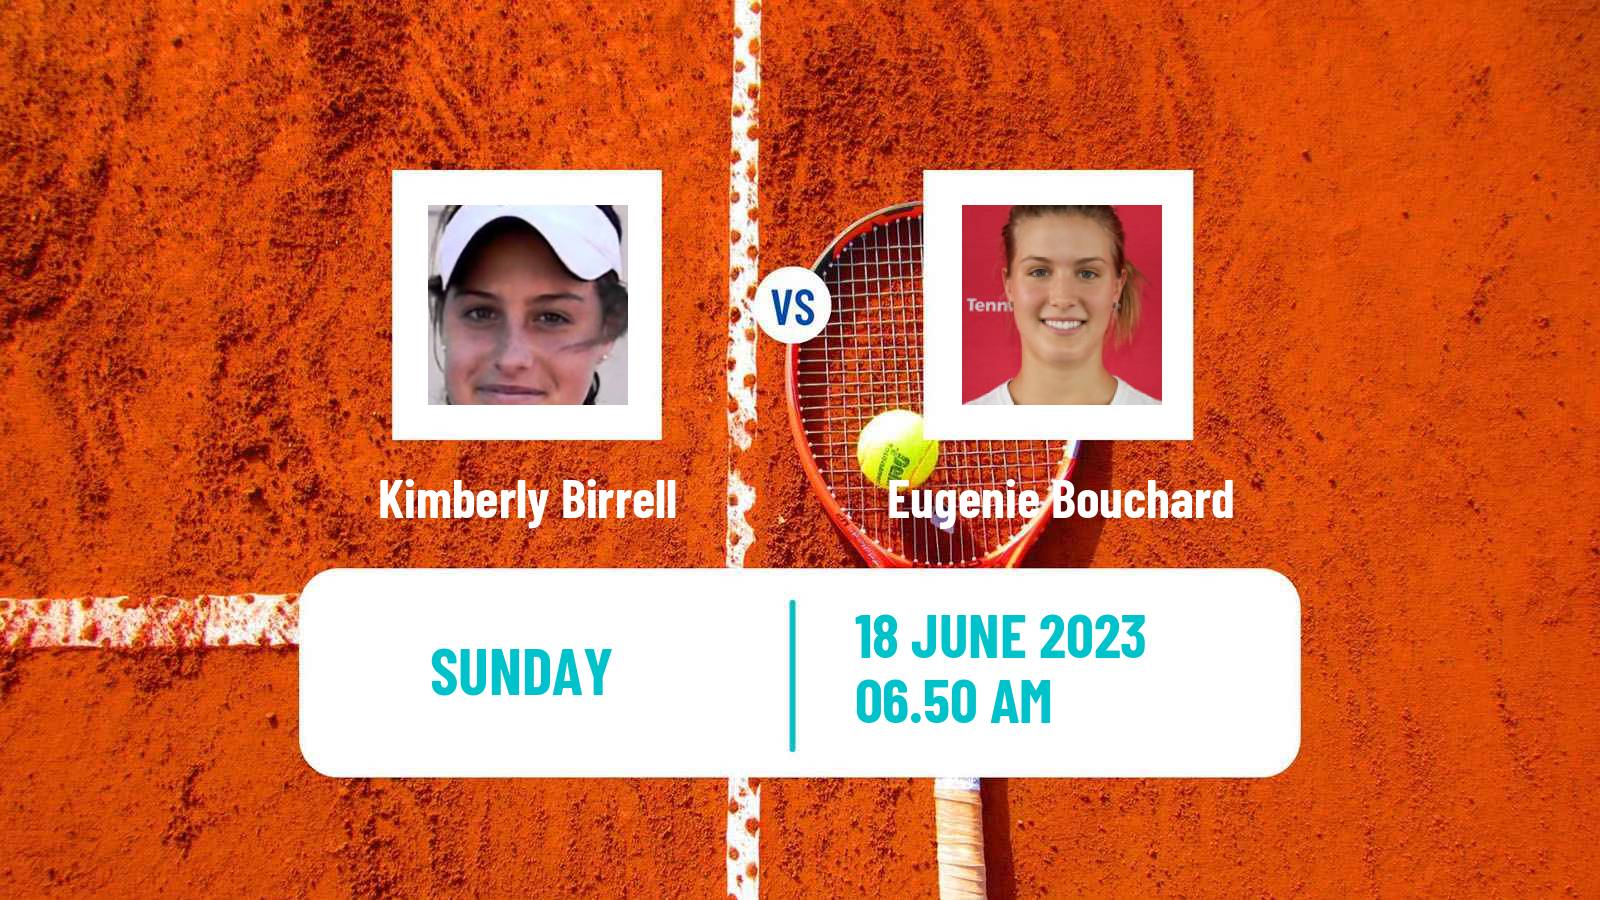 Tennis WTA Berlin Kimberly Birrell - Eugenie Bouchard